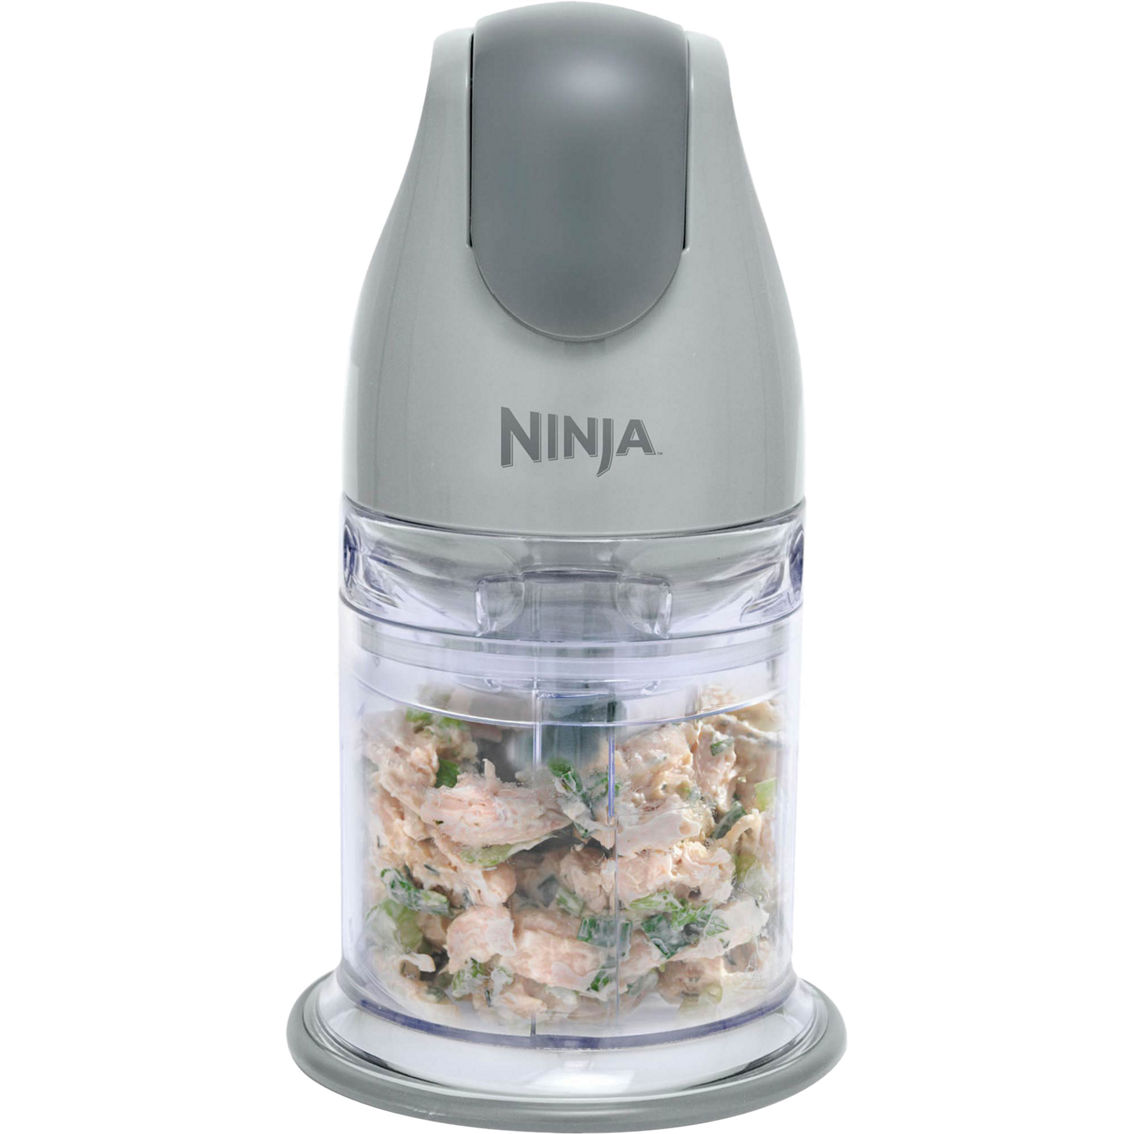  Ninja Master Prep Food and Beverage Blender, Gray